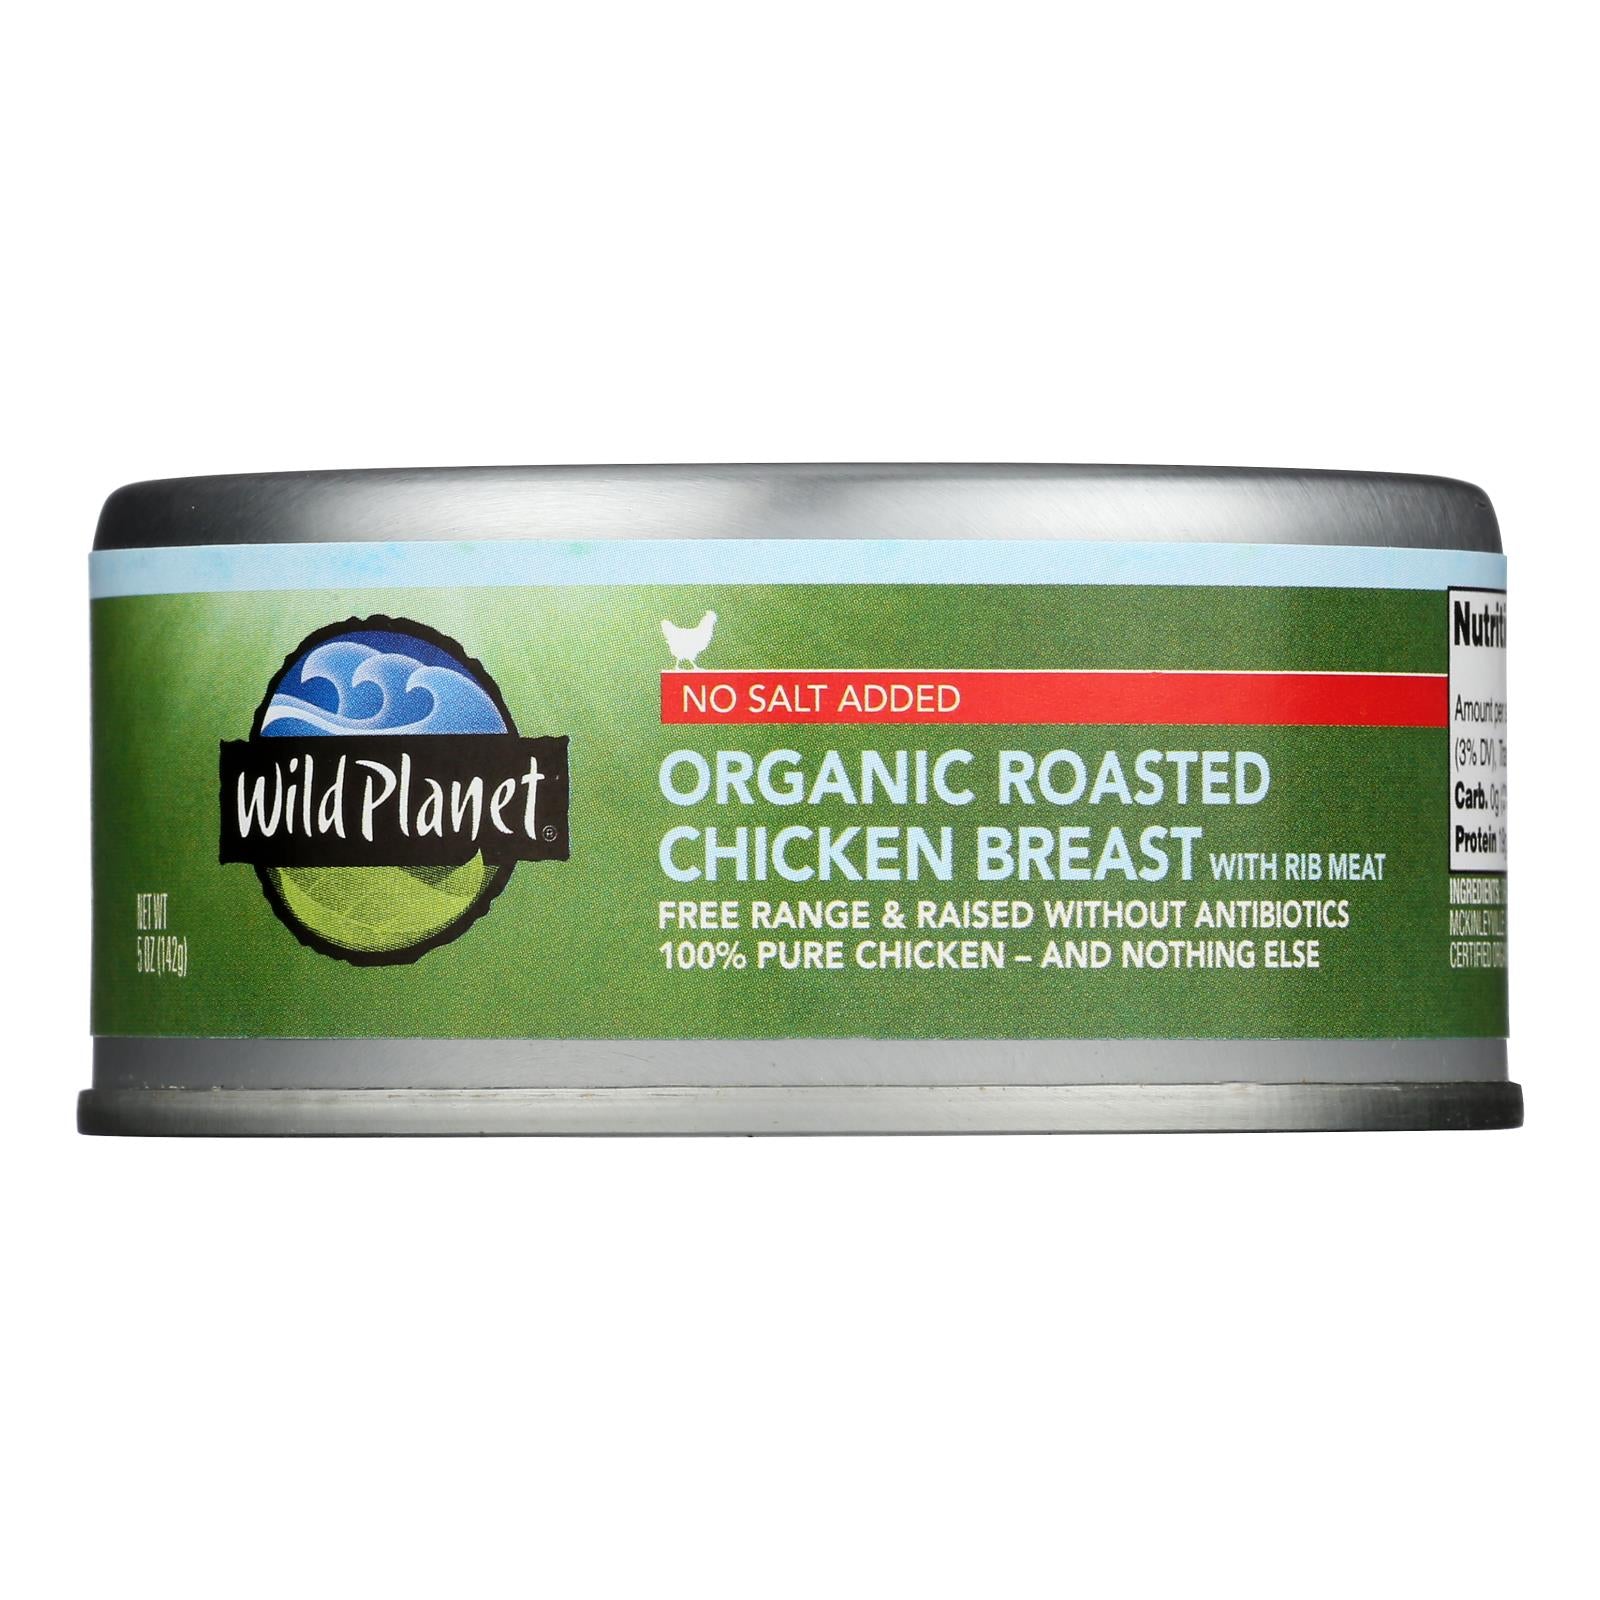 Wild Planet Organic Roasted Chicken Breast - No Salt Added - Case Of 12 - 5 Oz.